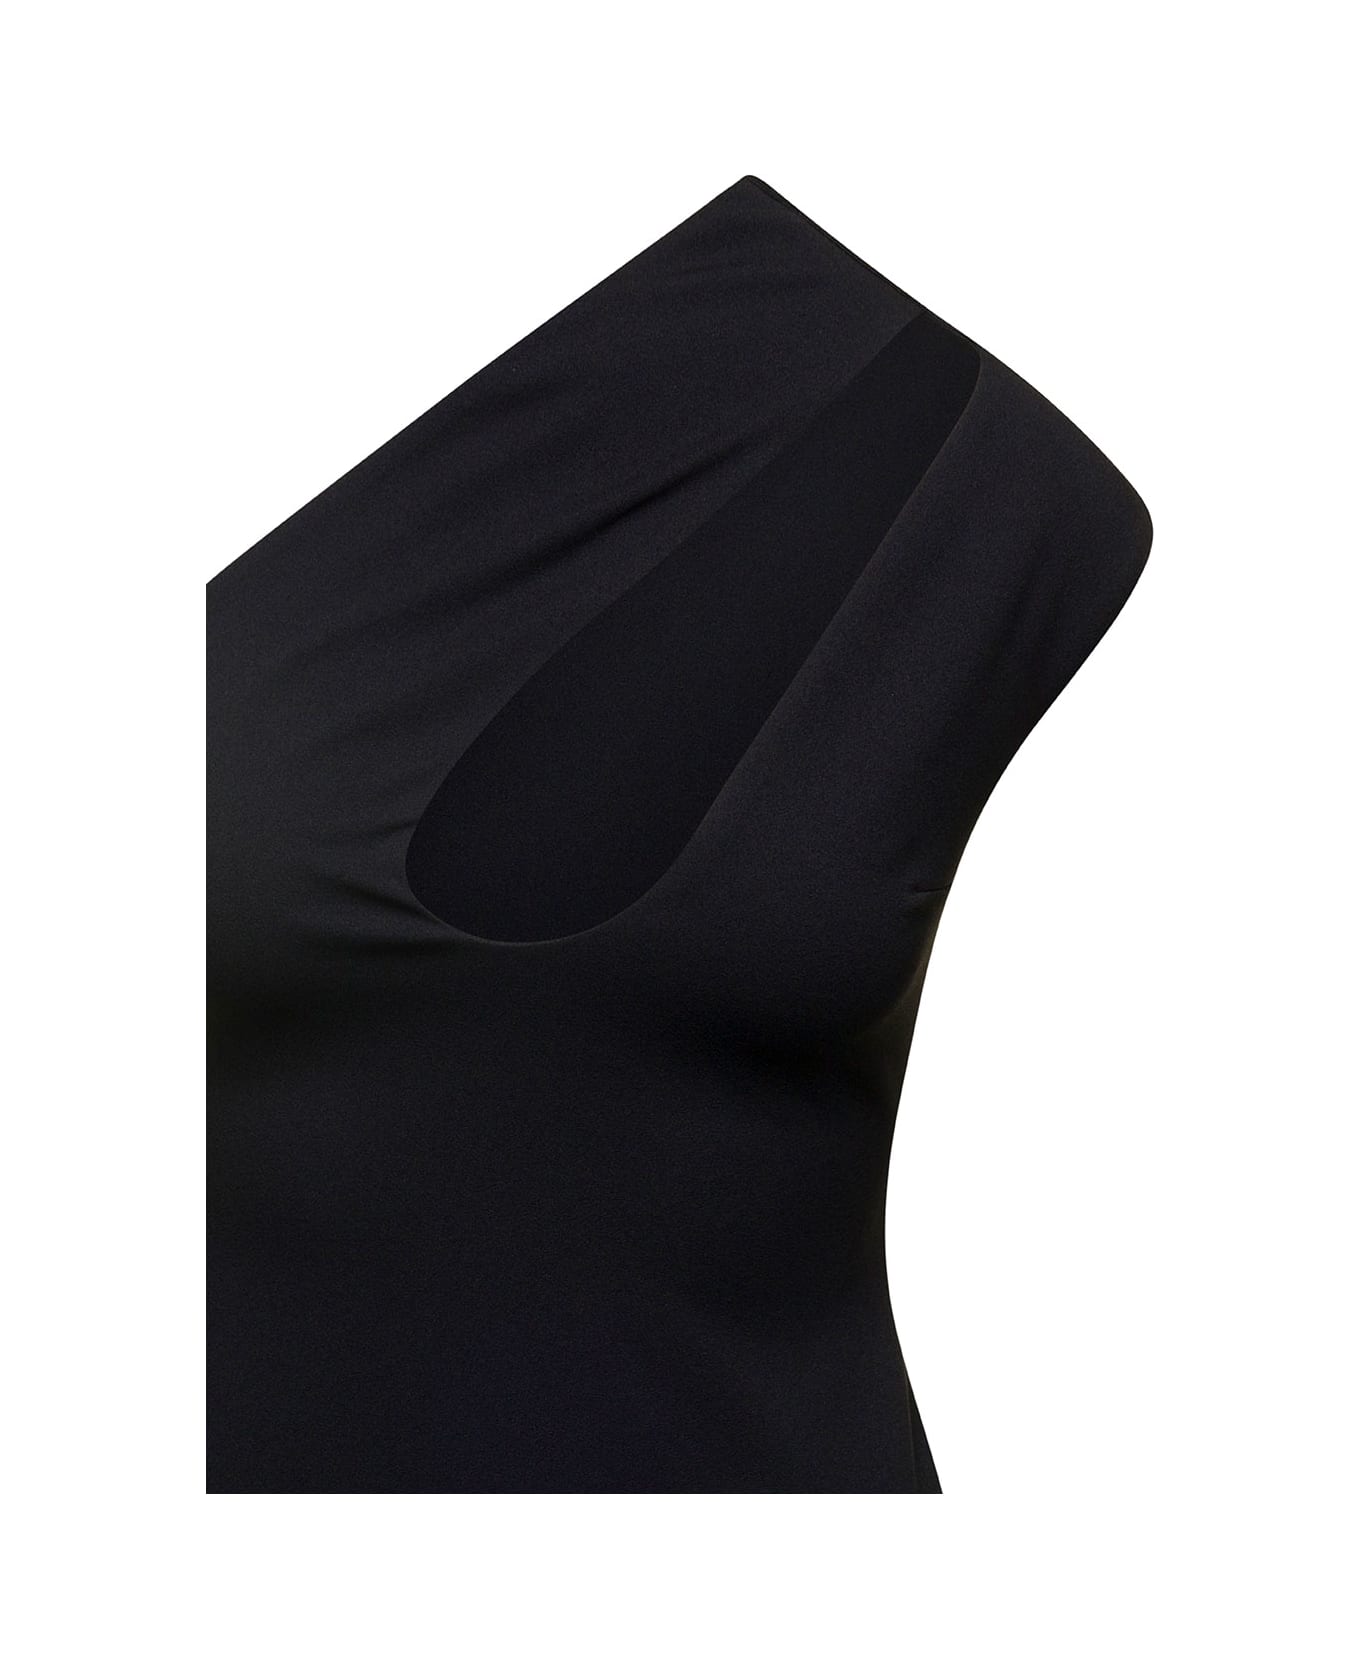 Solace London Black Alexa Cut-out Minidress In Crepe Knit Woman - Black ワンピース＆ドレス